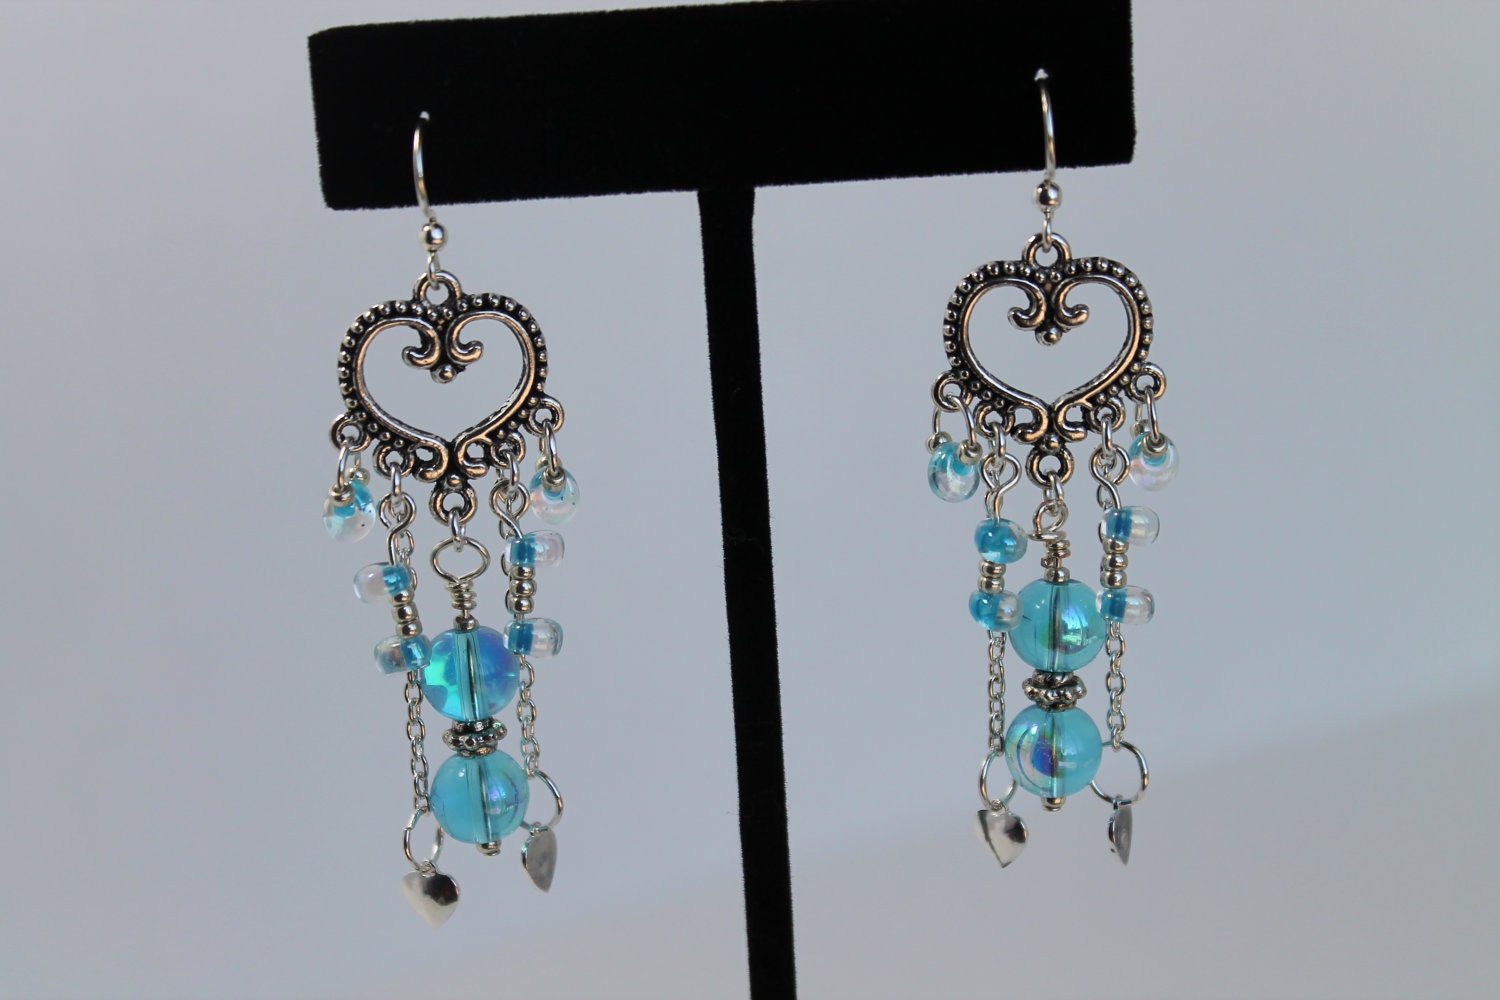 Chandelier Heart Earrings With Aqua Blue Glass Beads - Etsy